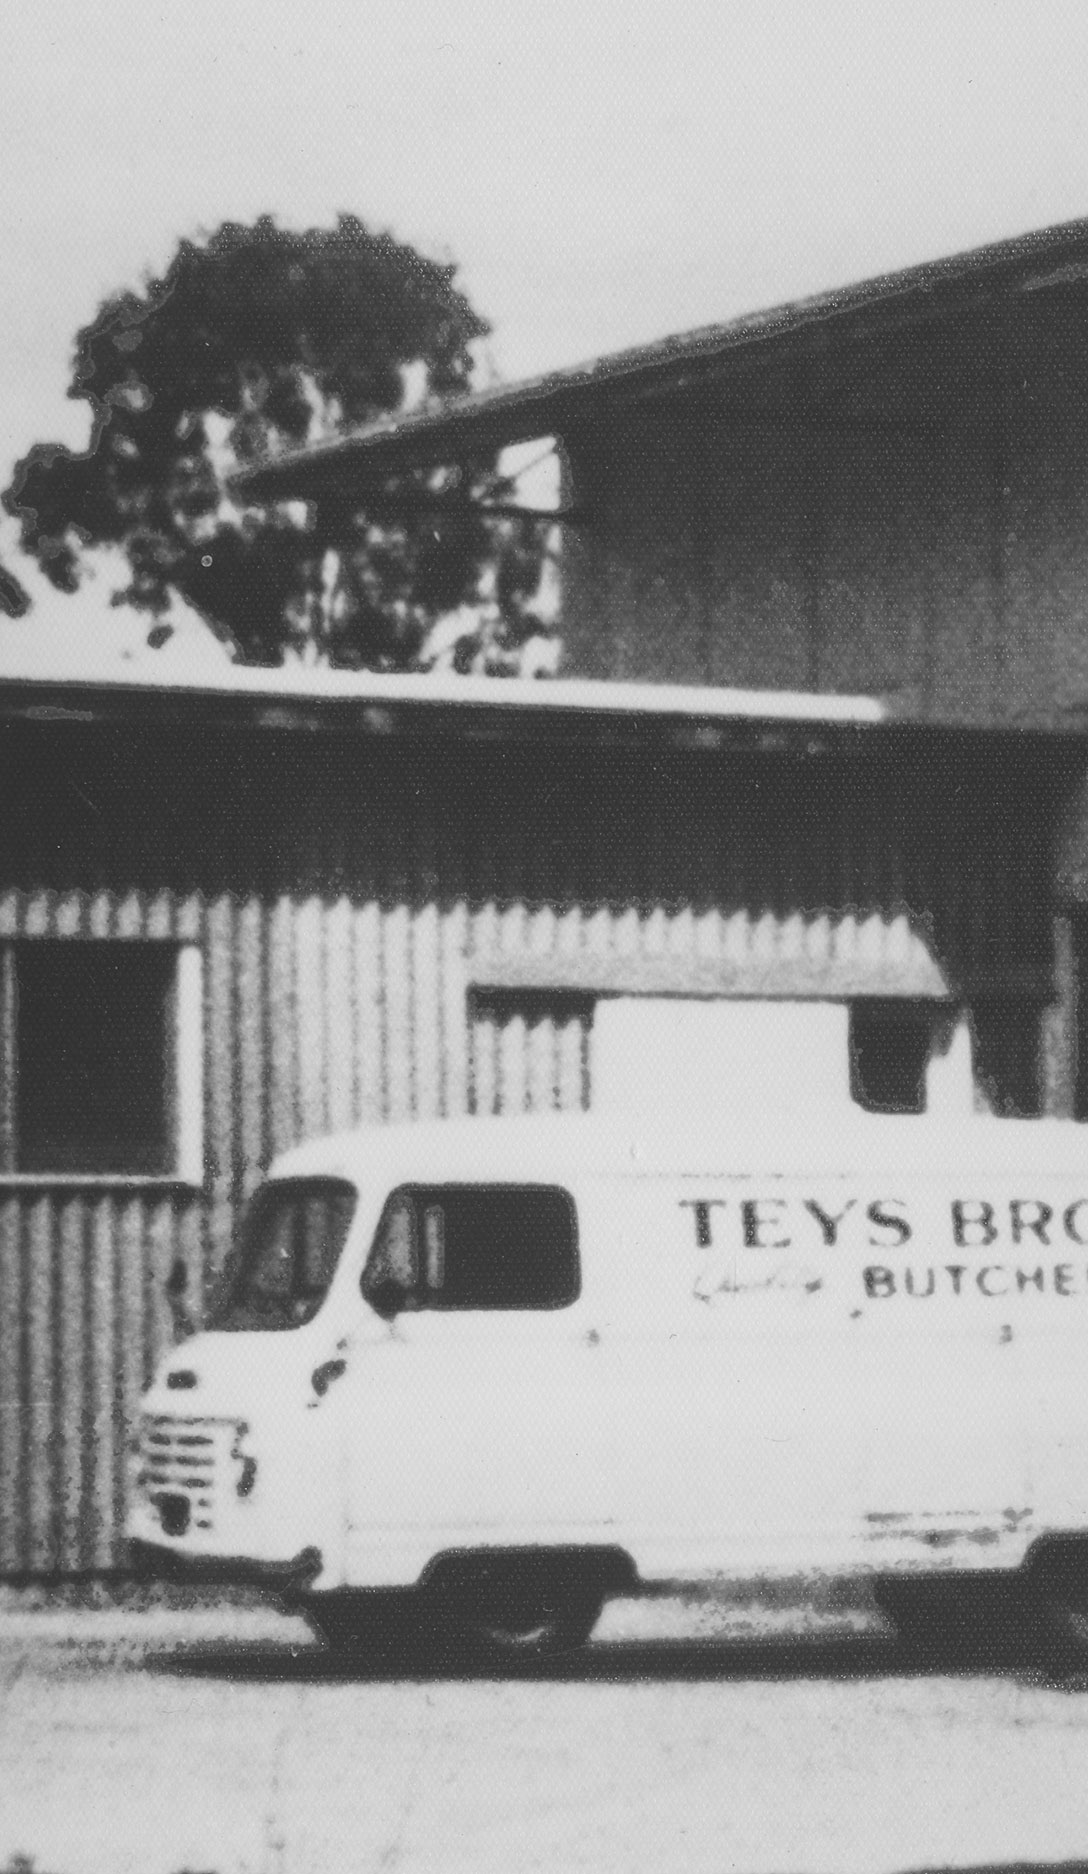 Teys history of butcher shop